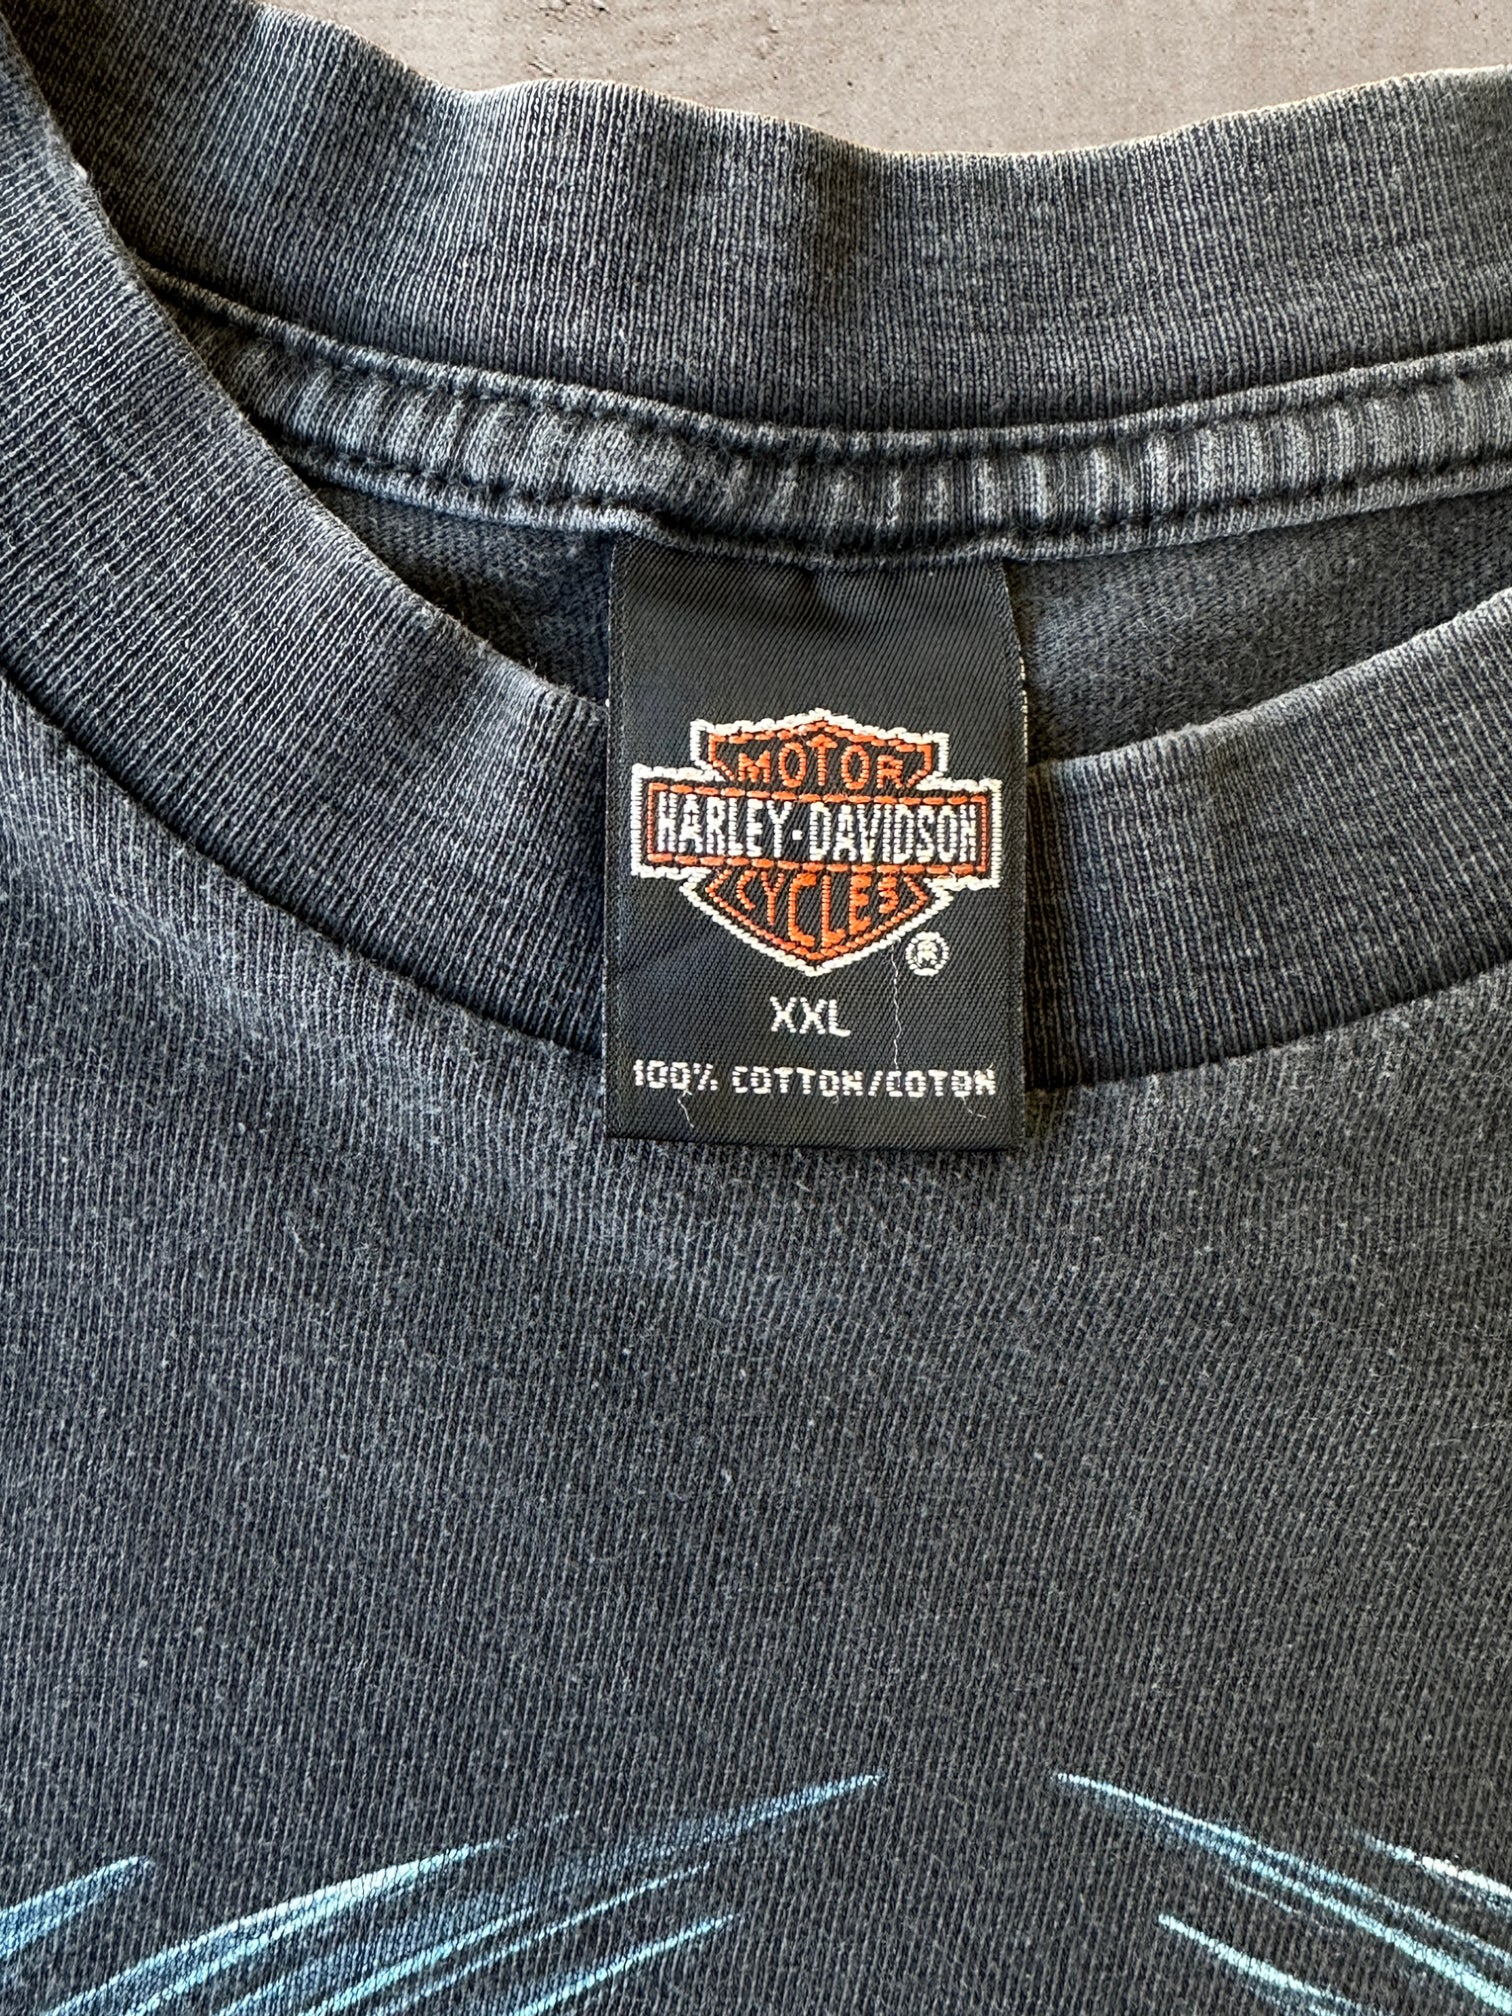 1999 Harley Davidson Graphic T-Shirt - XL